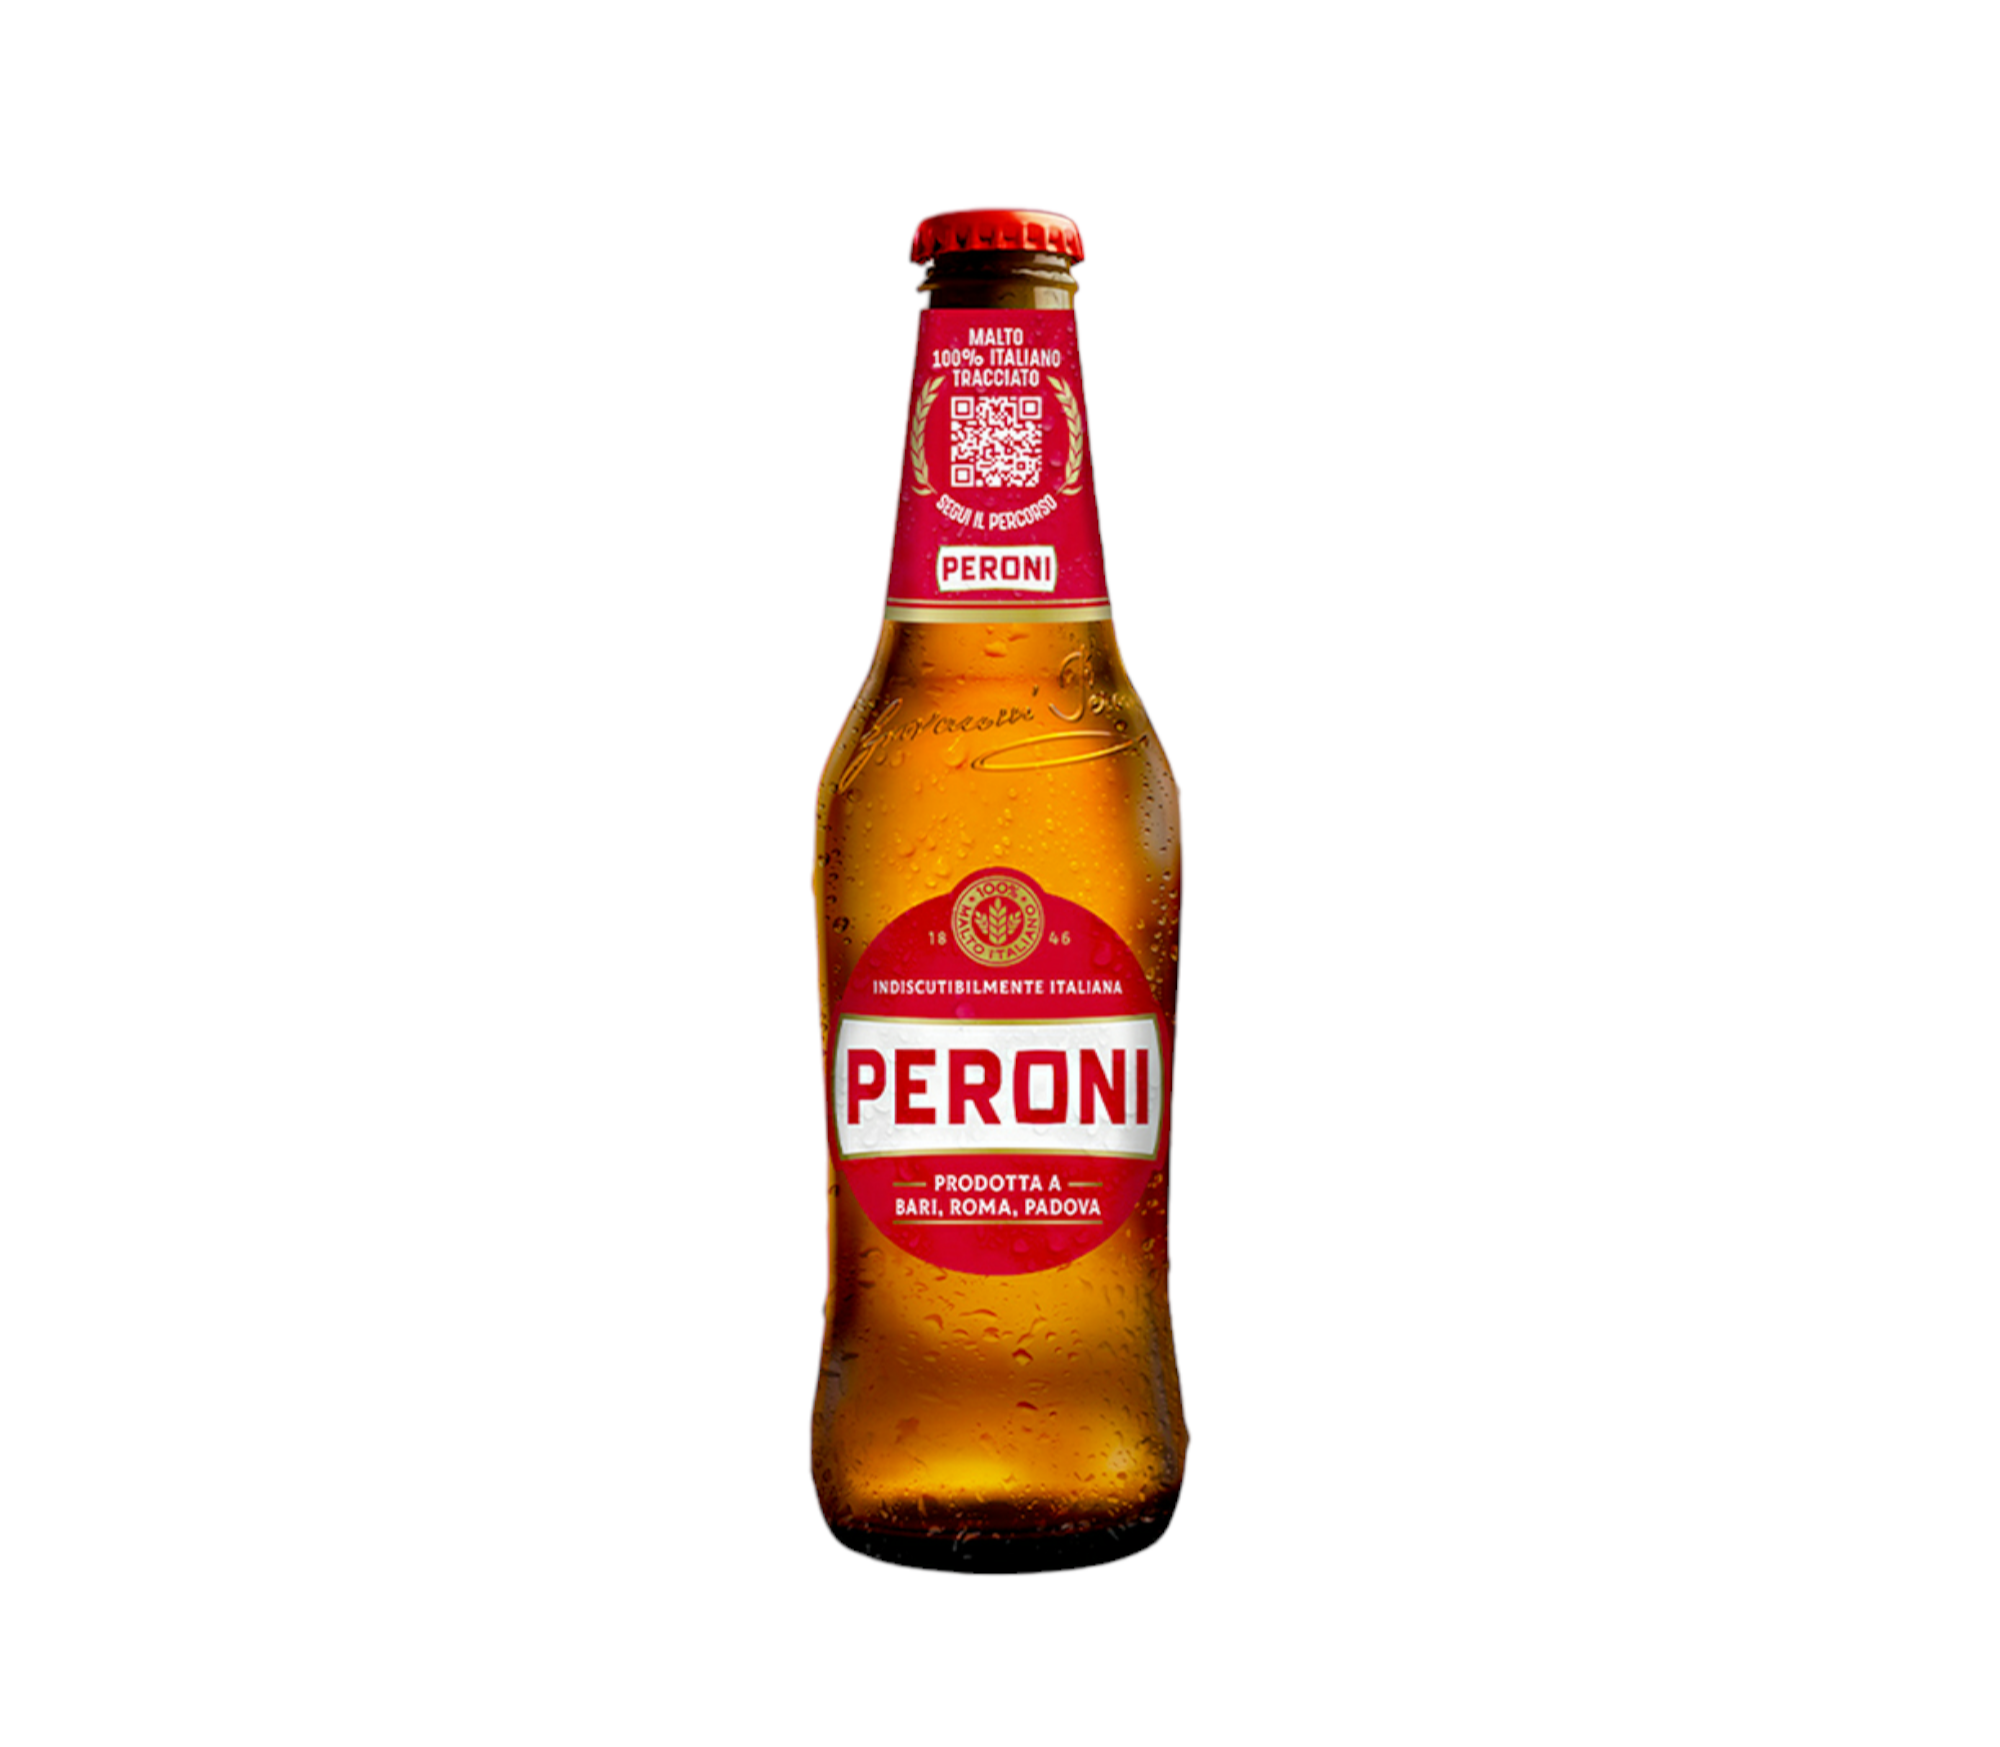 Peroni Bier Prodotta a Bari 0,3l mit 4,7% Vol.